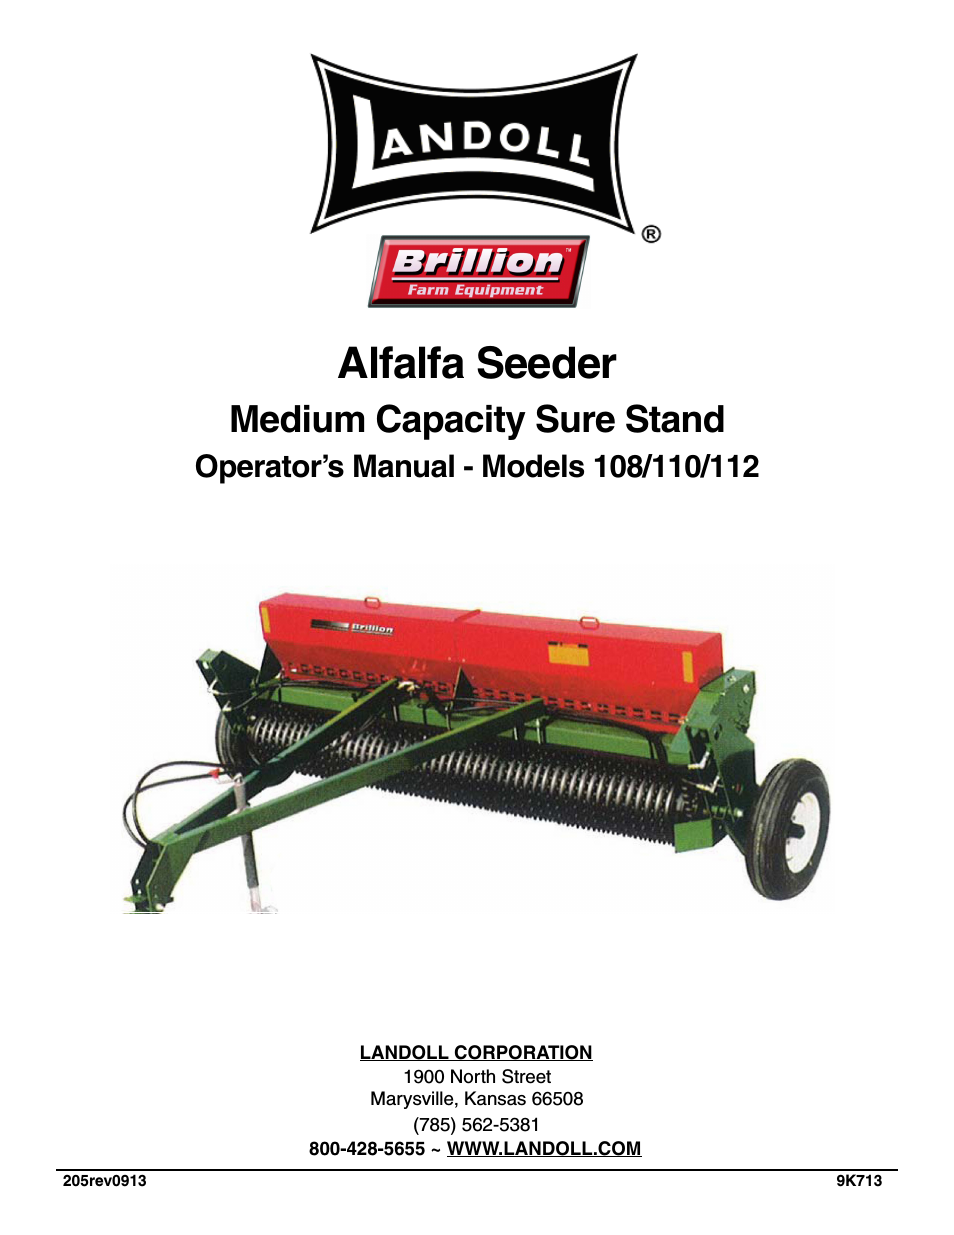 110 Alfalfa Seeder Medium Capacity Sure Stand